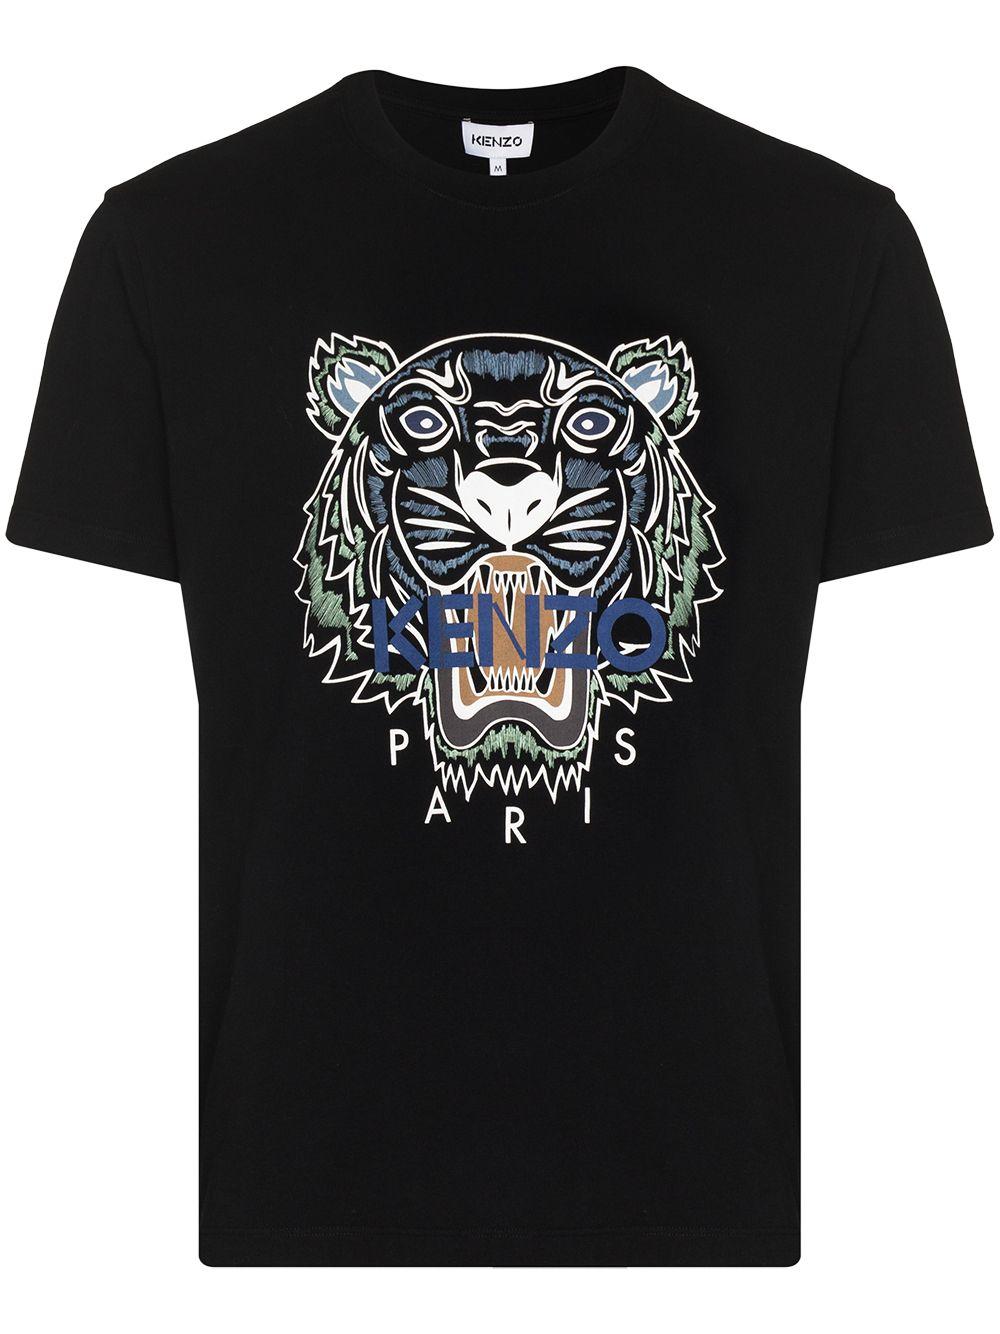 oorsprong Portaal Melancholie KENZO Tiger Classic T-shirt Black for Men | Lyst